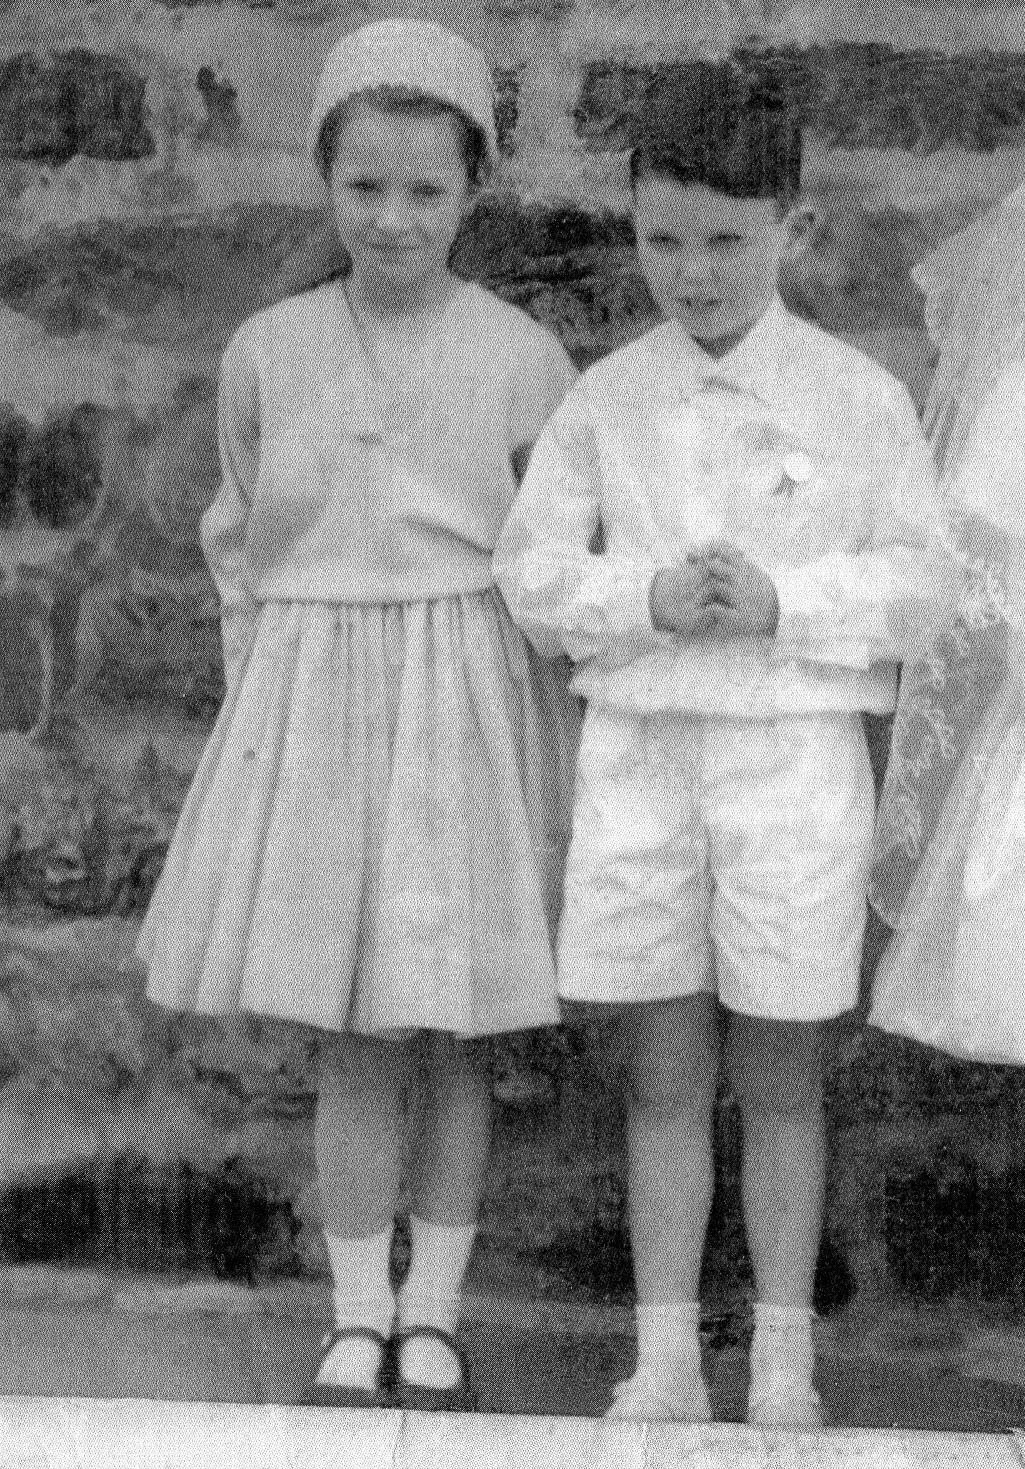 Siblings Joan and Bernard Clark when they were children. 